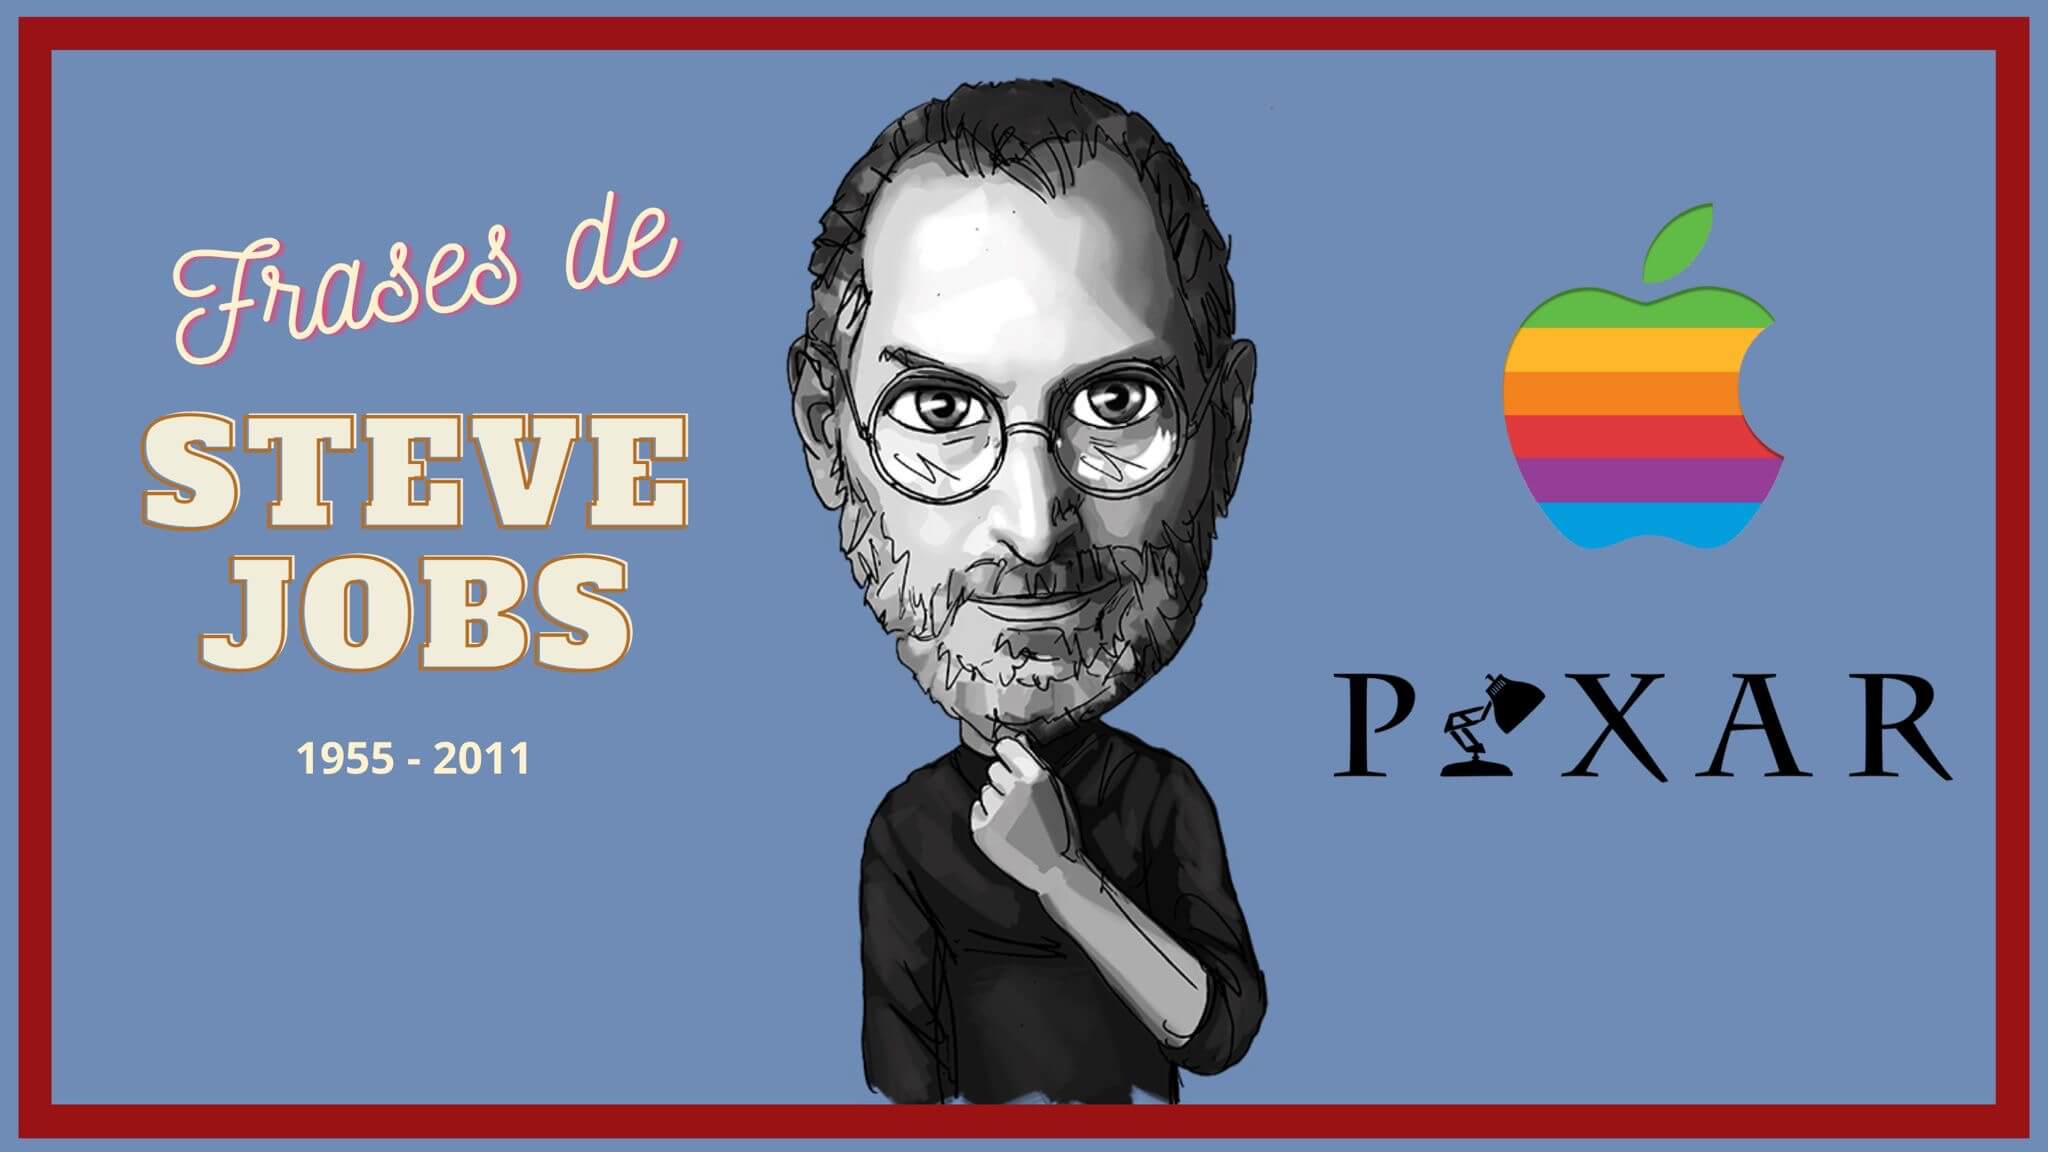 94 Frases de Steve Jobs como enseñanzas para la vida